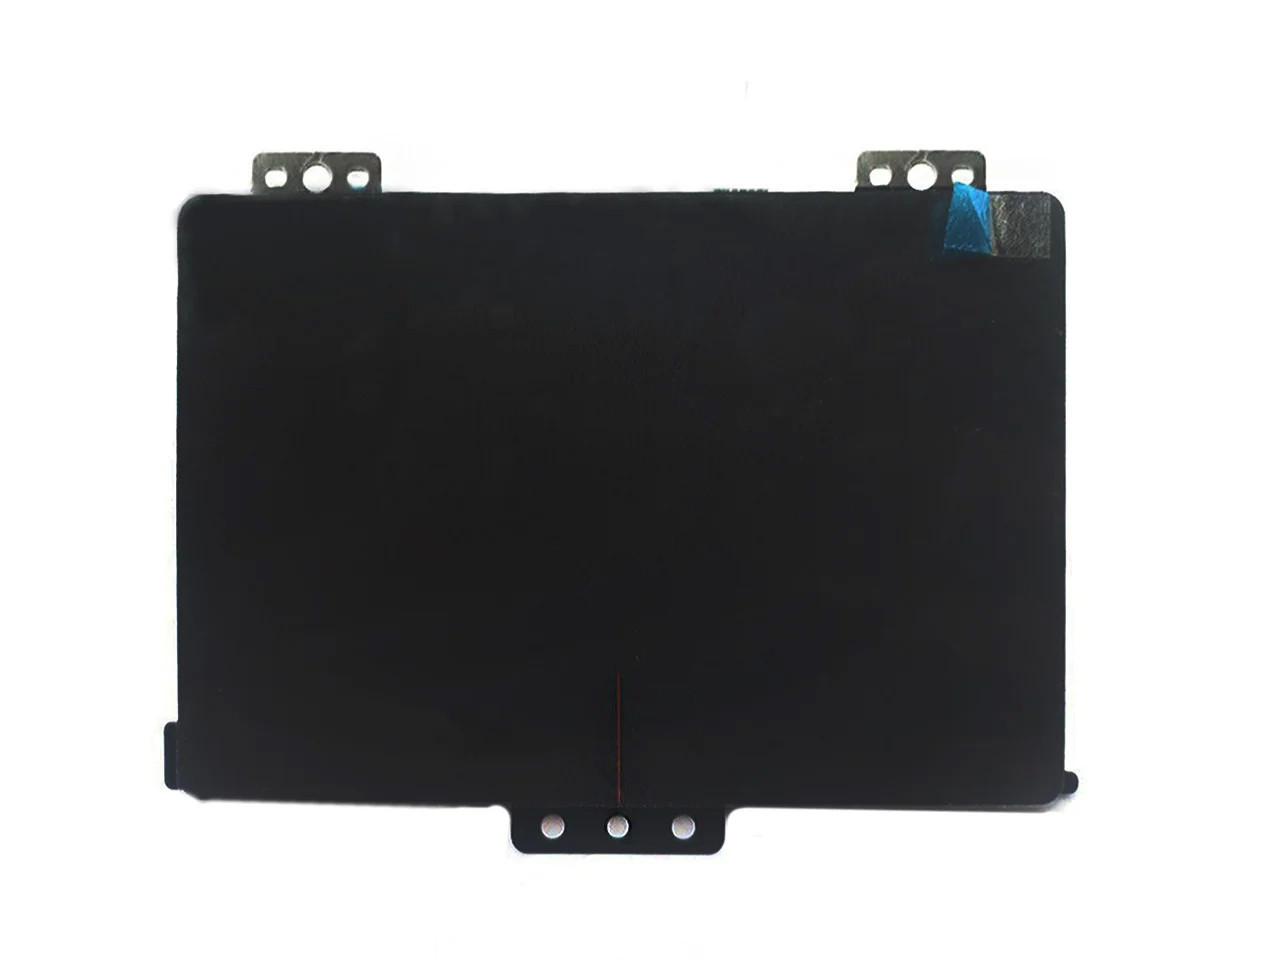 Тачпад (Touchpad) для Lenovo IdeaPad Y700-15 черный